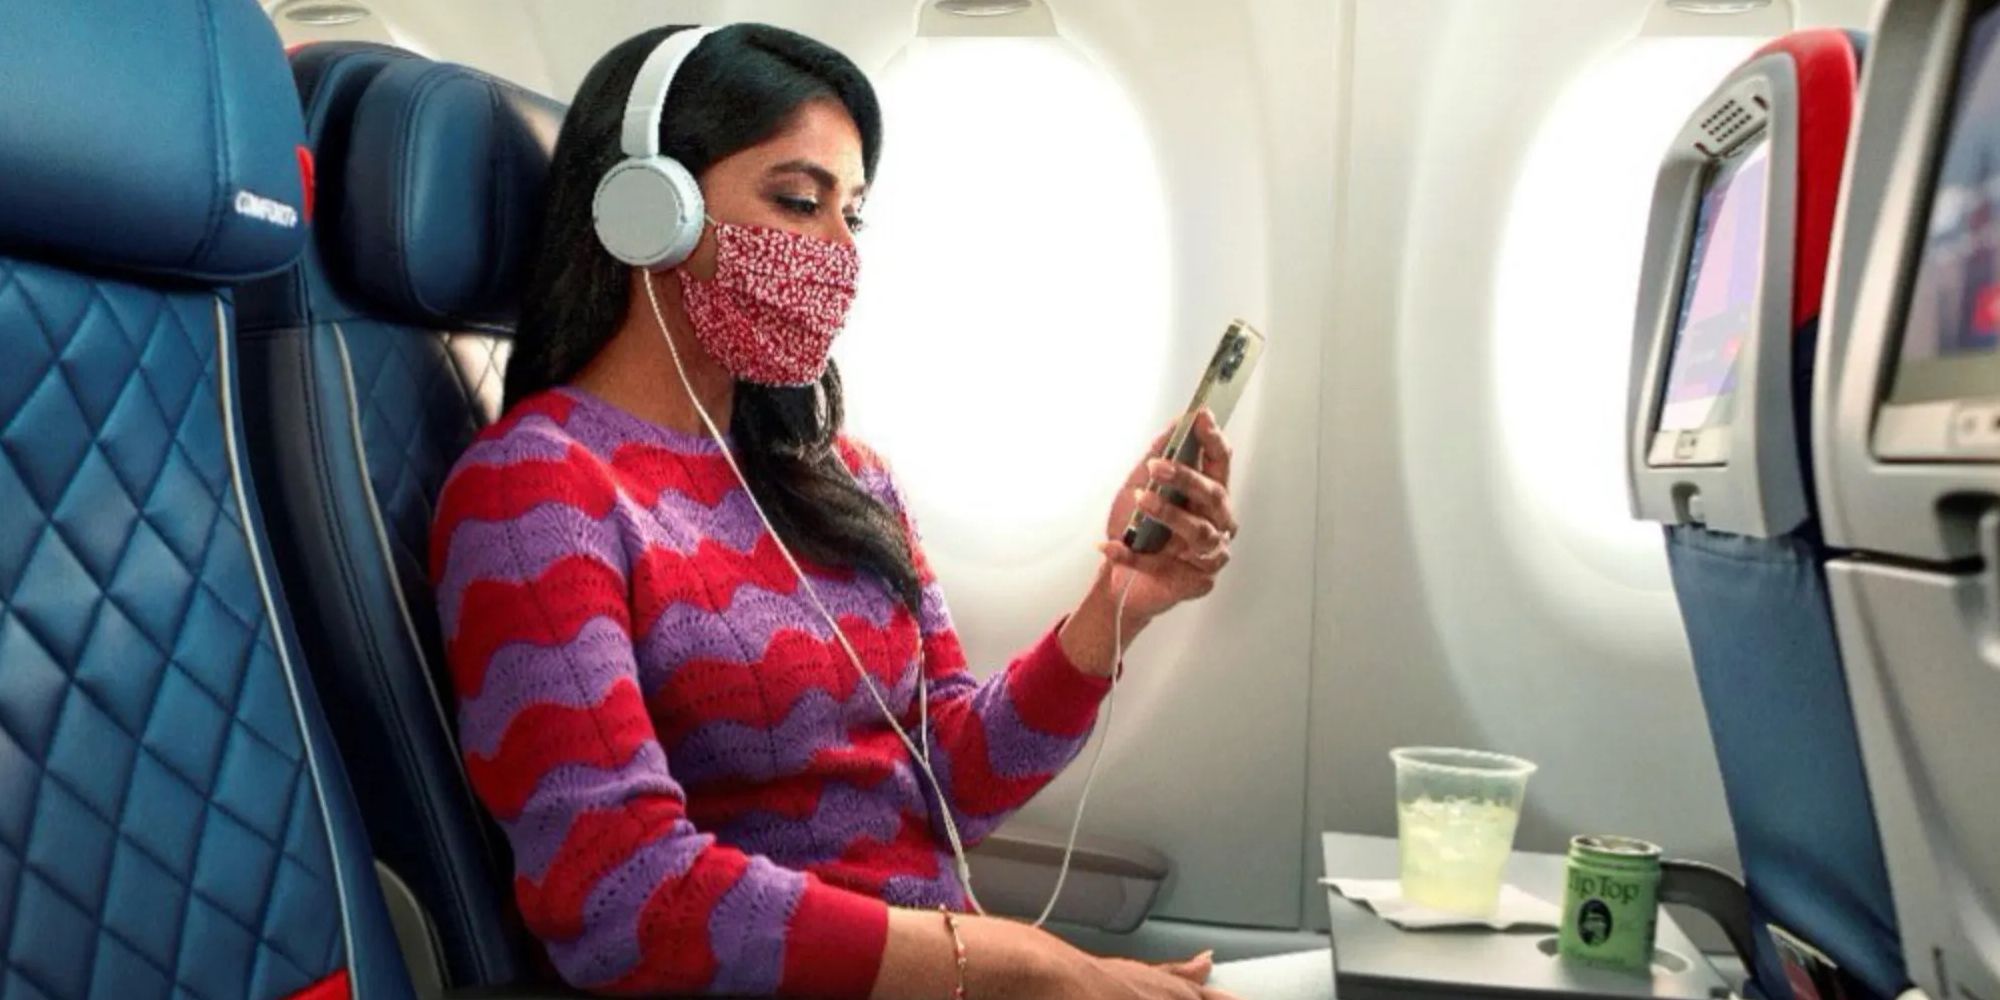 Women listening to music with headphones in-flight